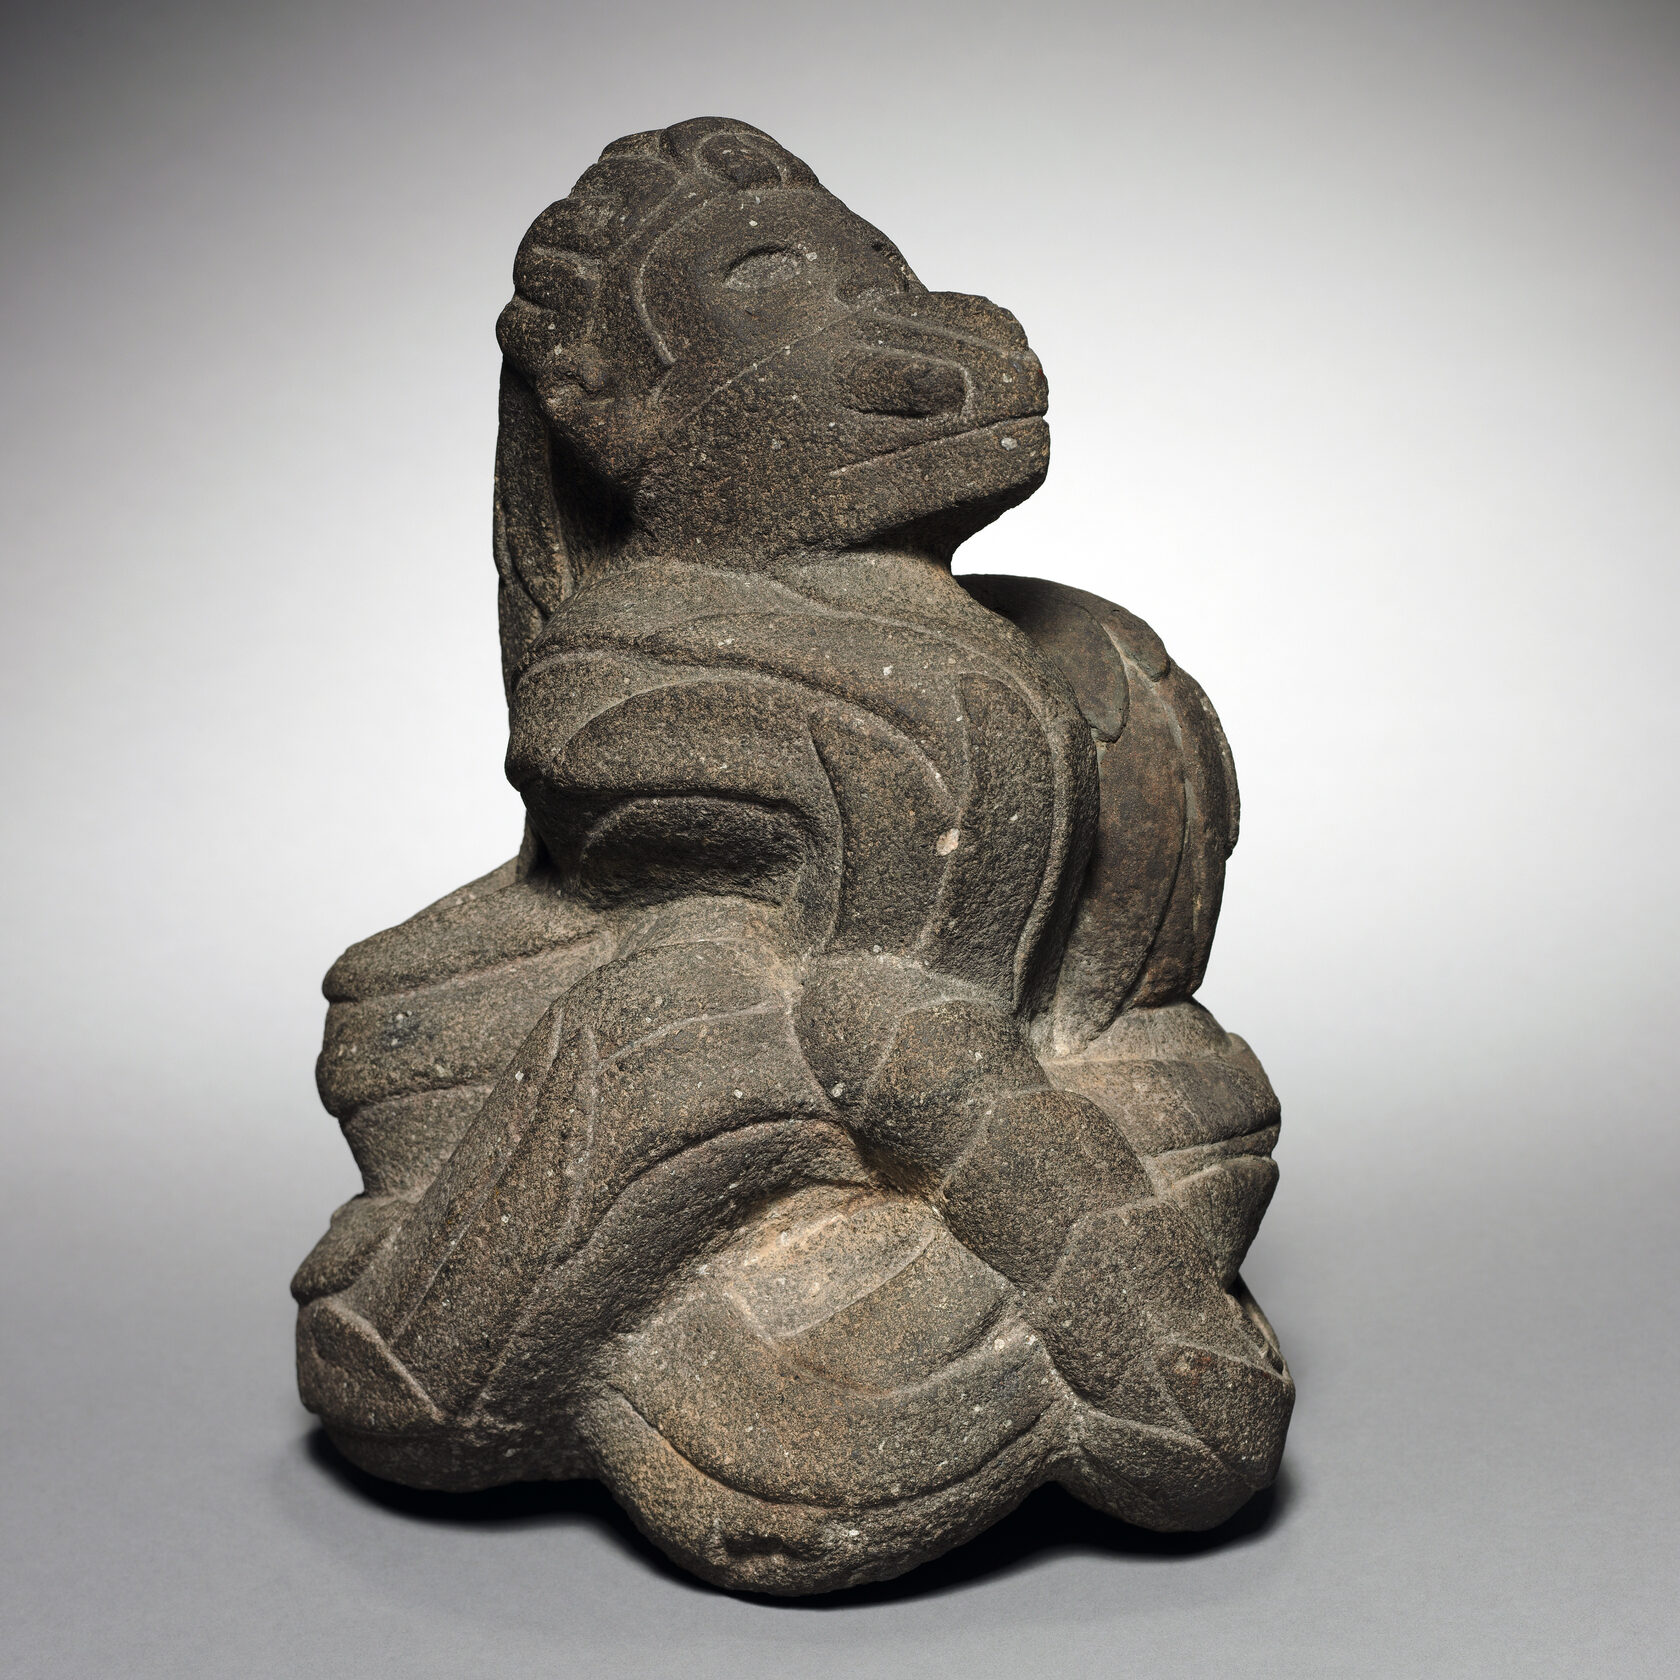 Кецалькоатль. Ацтеки, 1325-1521 гг. н.э. Коллекция Cleveland Museum of Art.